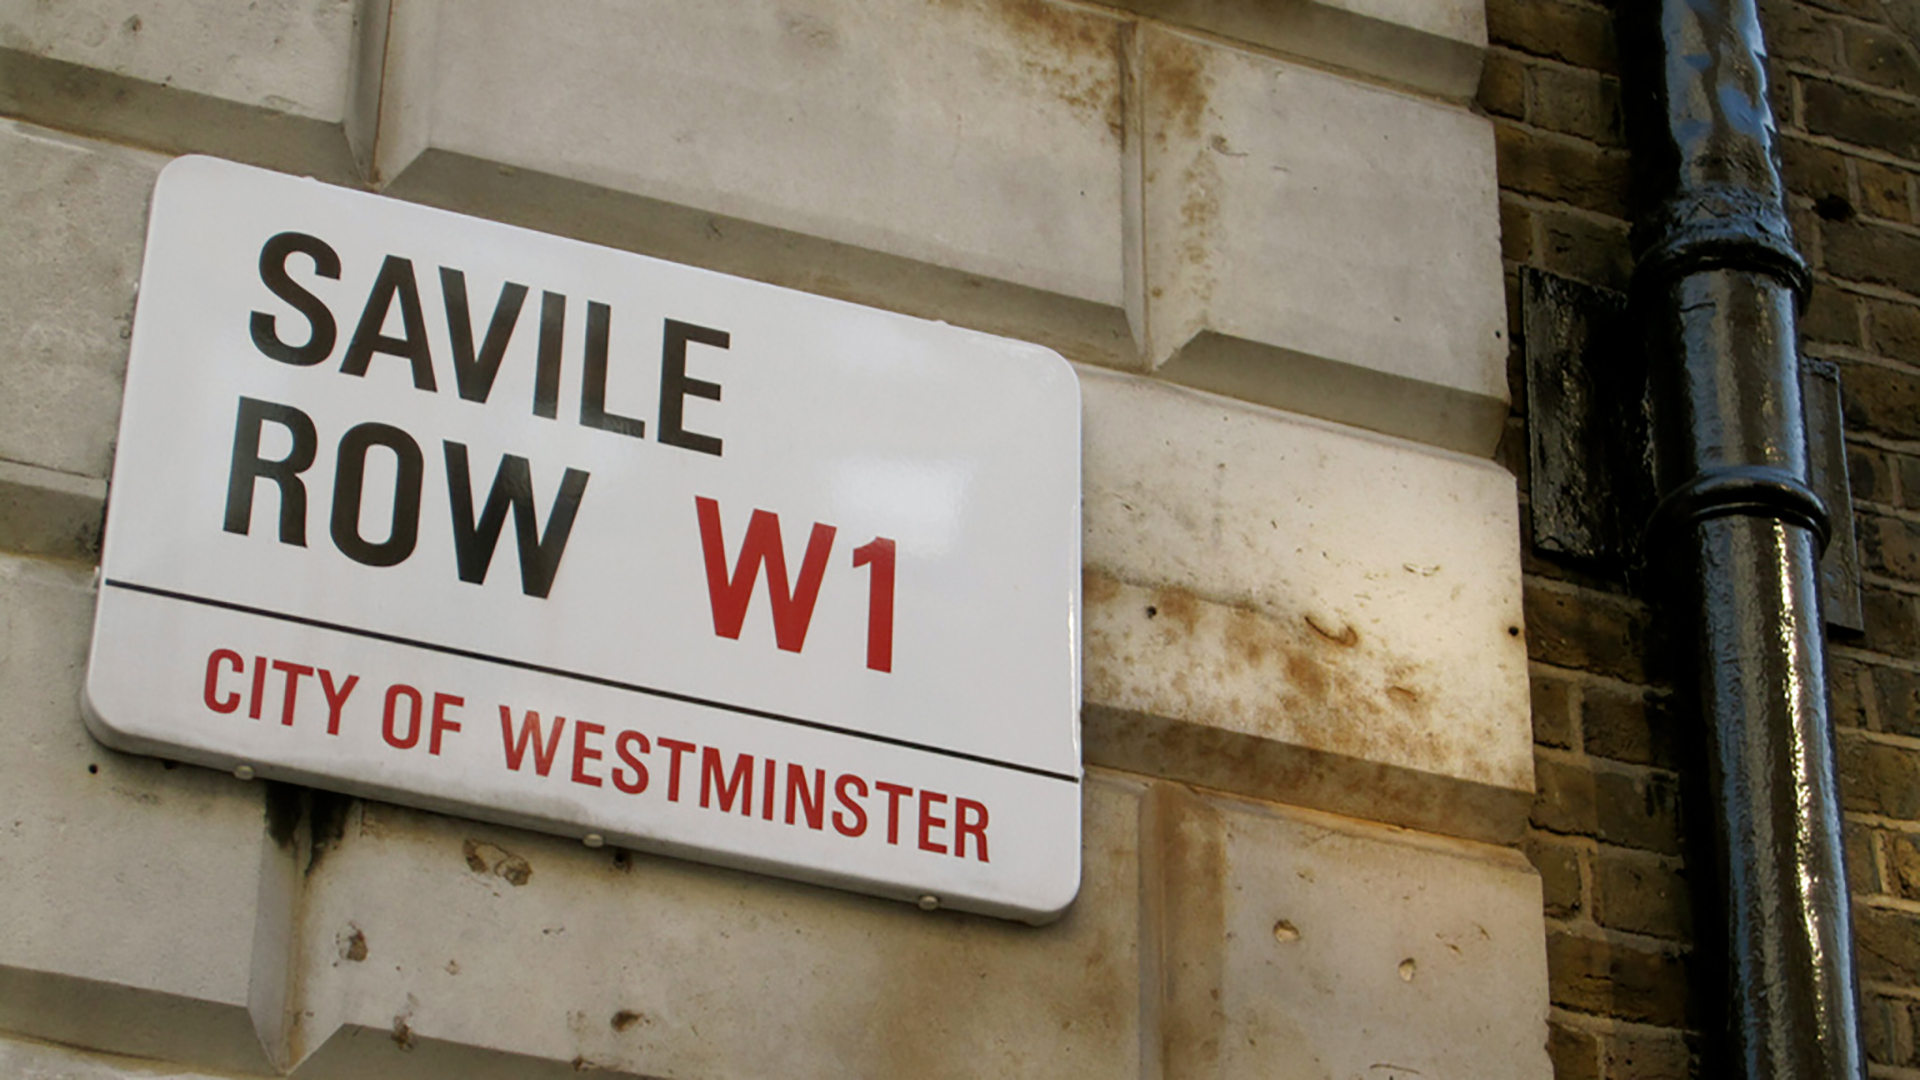 Savile Row street sign